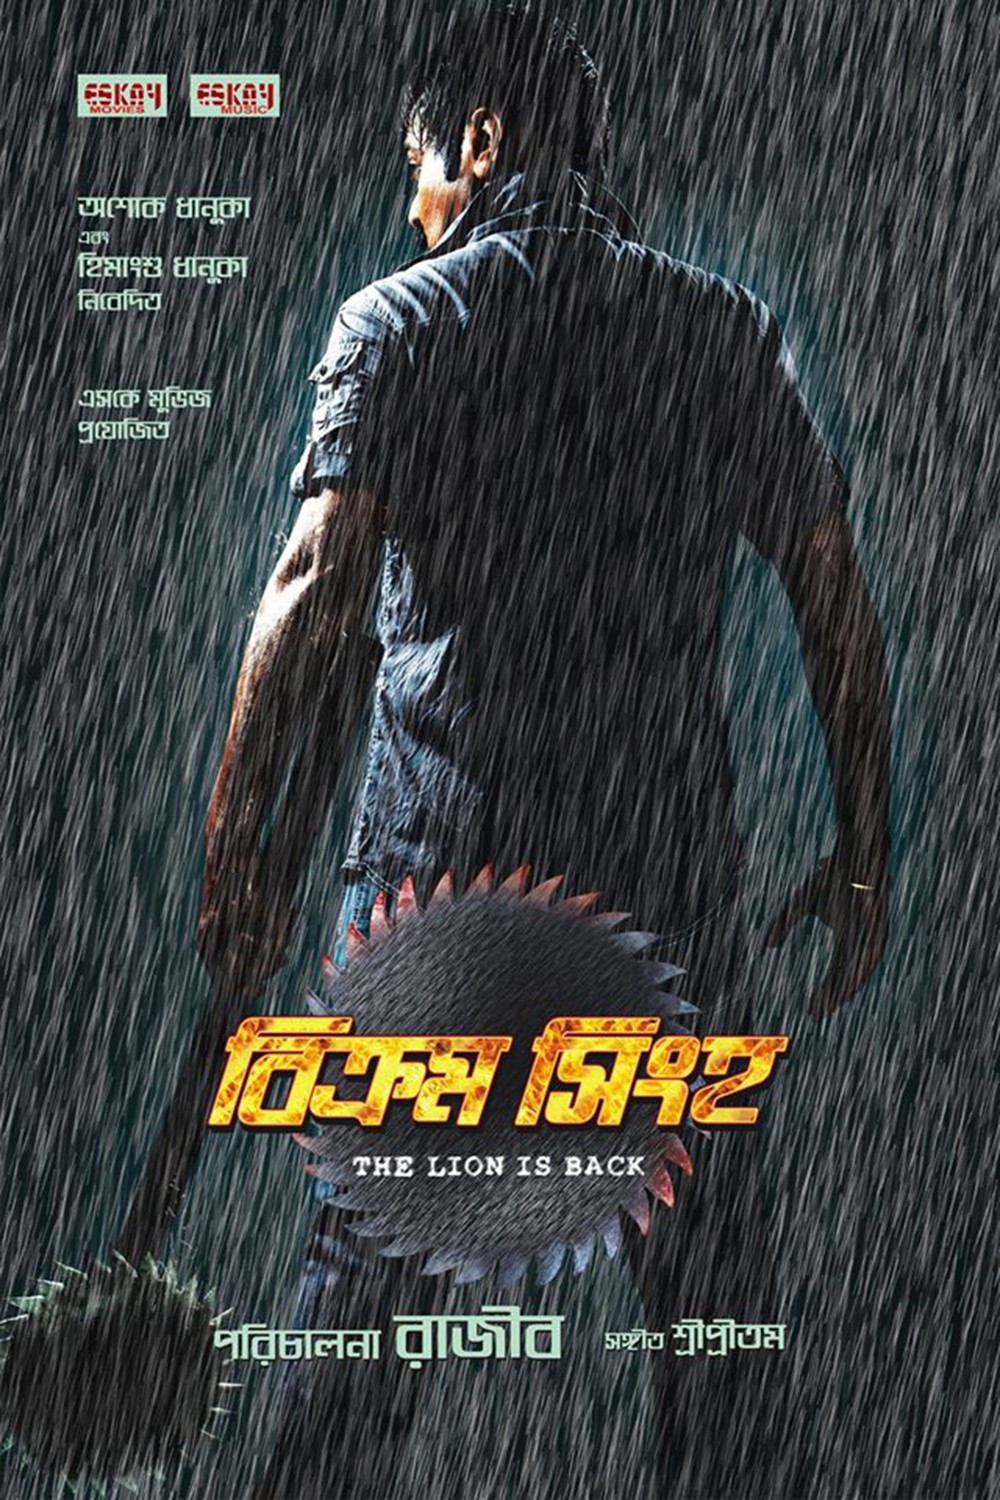 Extra Large Movie Poster Image for Bikram Singha: The Lion Is Back (#1 of 2)